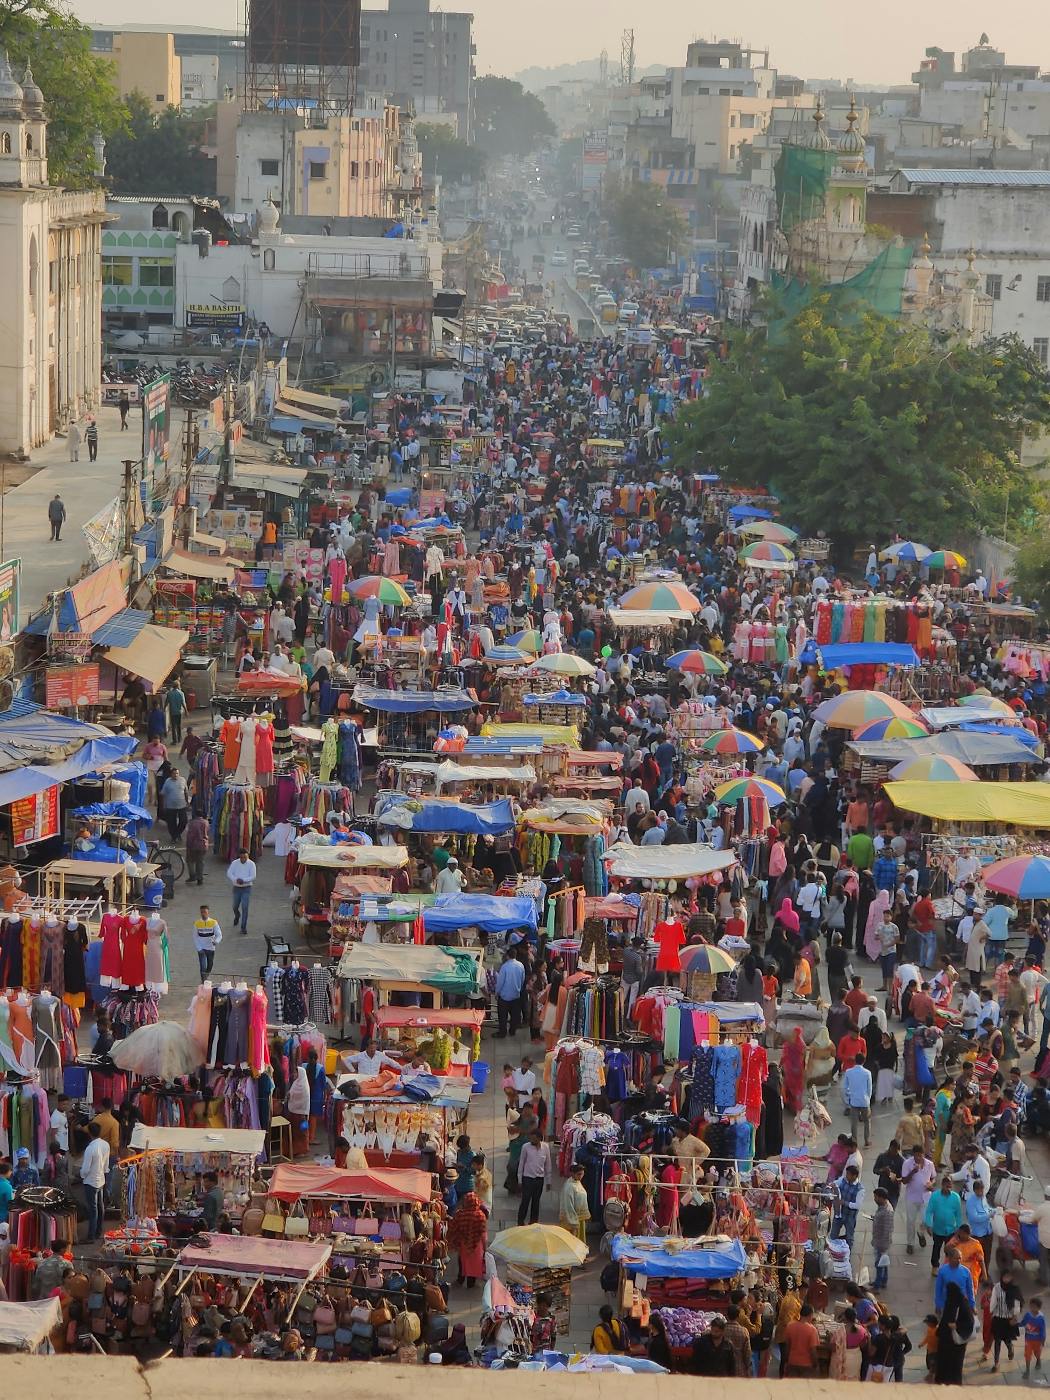 A crowded street market